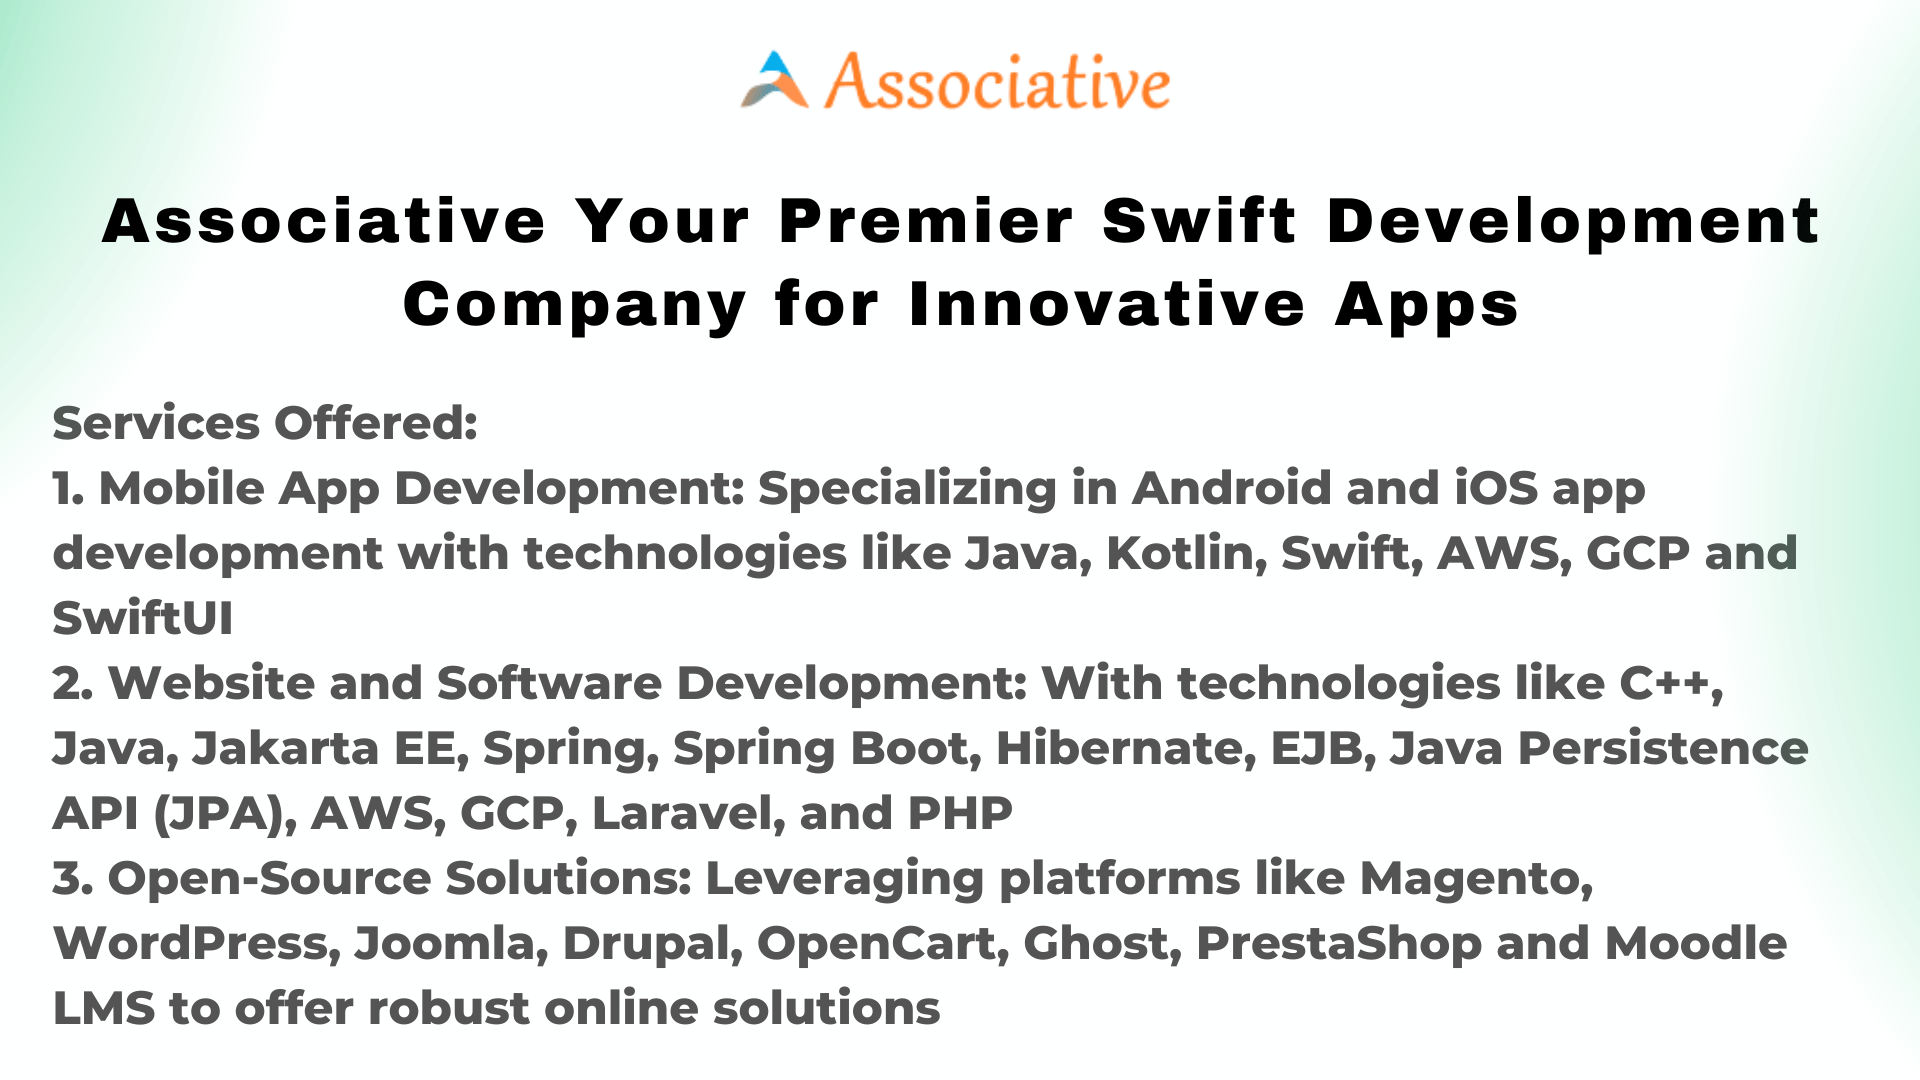 Associative Your Premier Swift Development Company for Innovative Apps